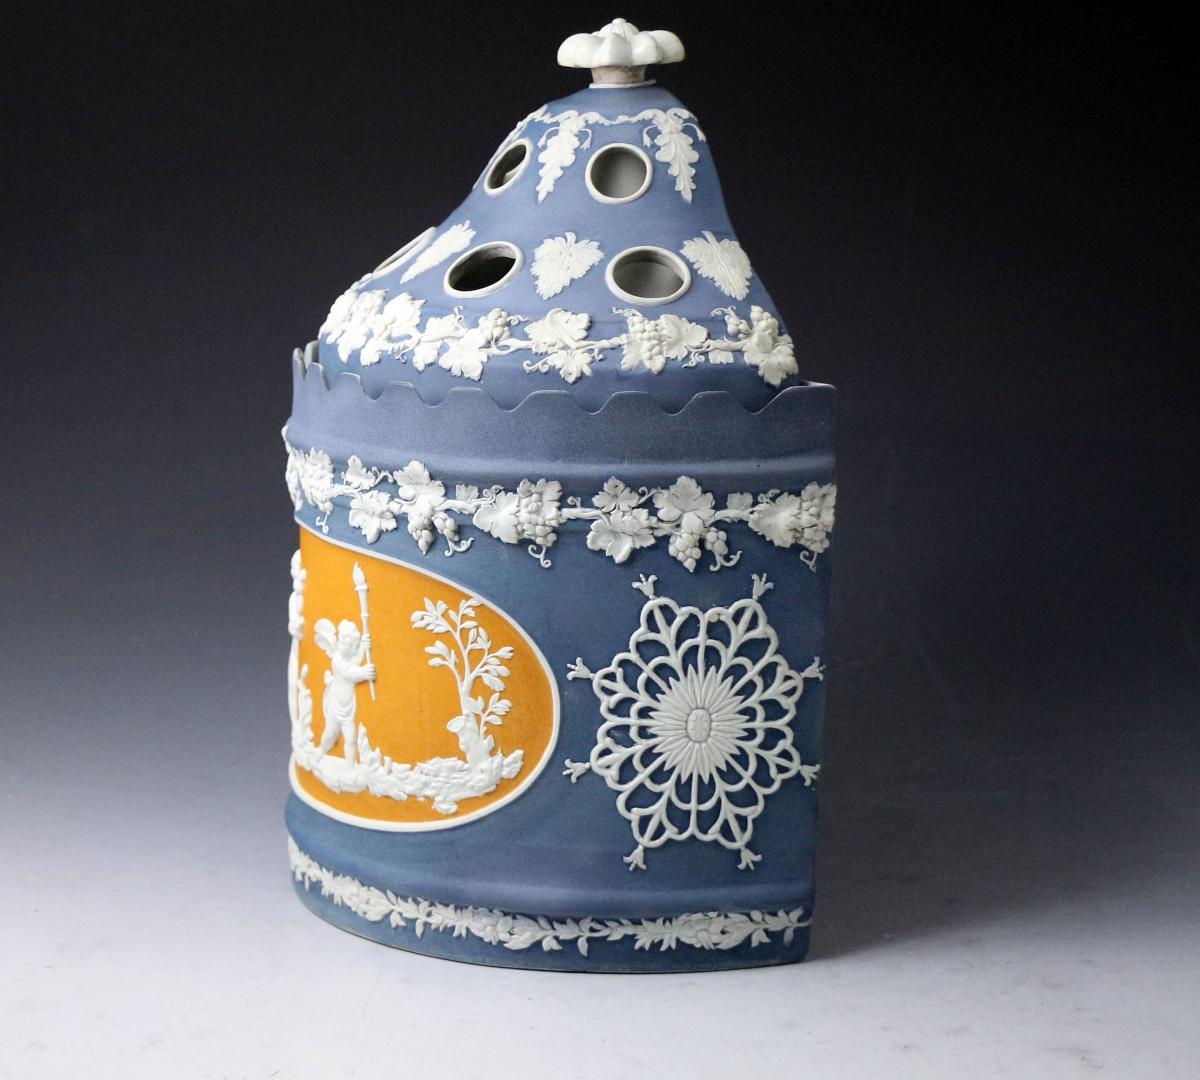 Felsparic jasperware Bough or Crocus Pots made by Daniel Steel Staffordshire England